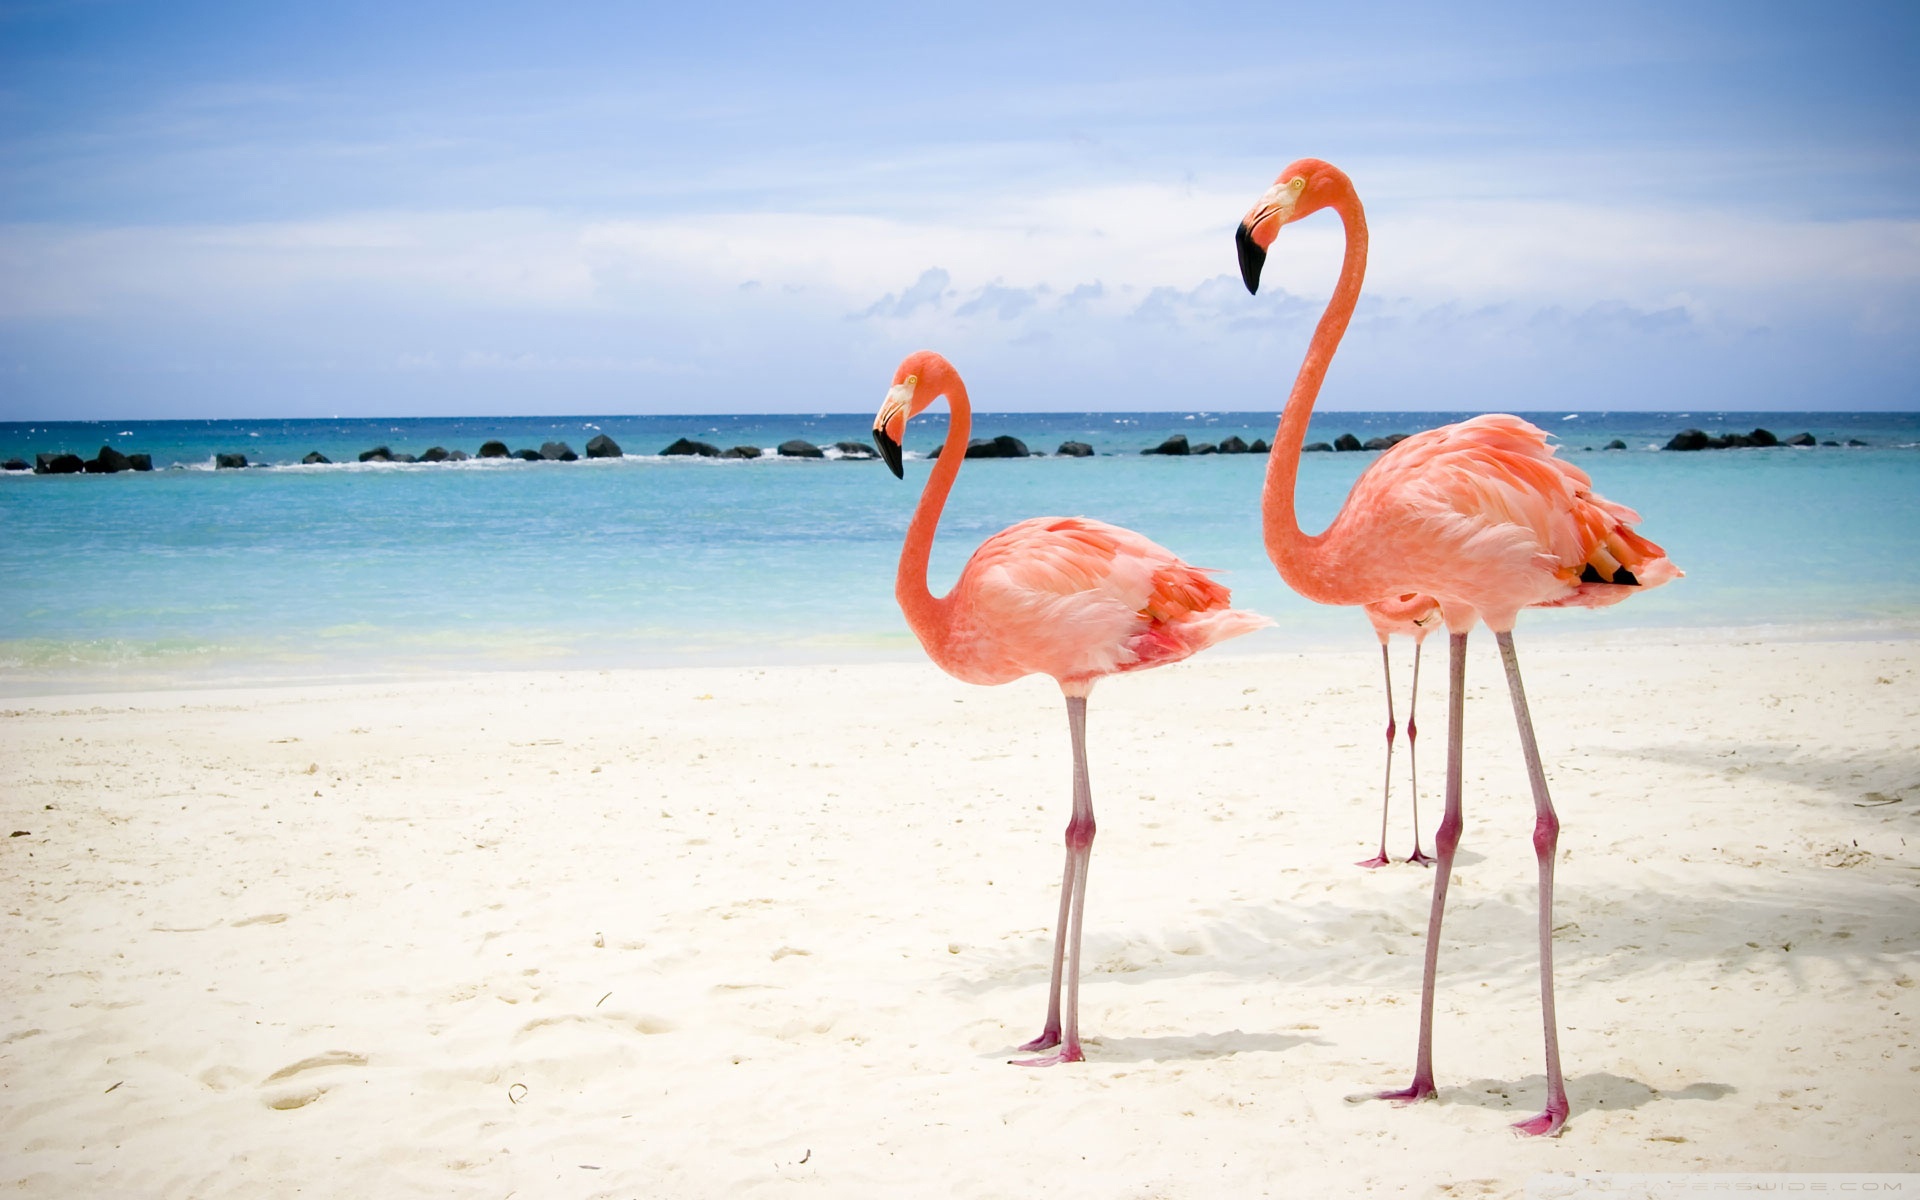 A couple of flamingos standing on the beach - Flamingo